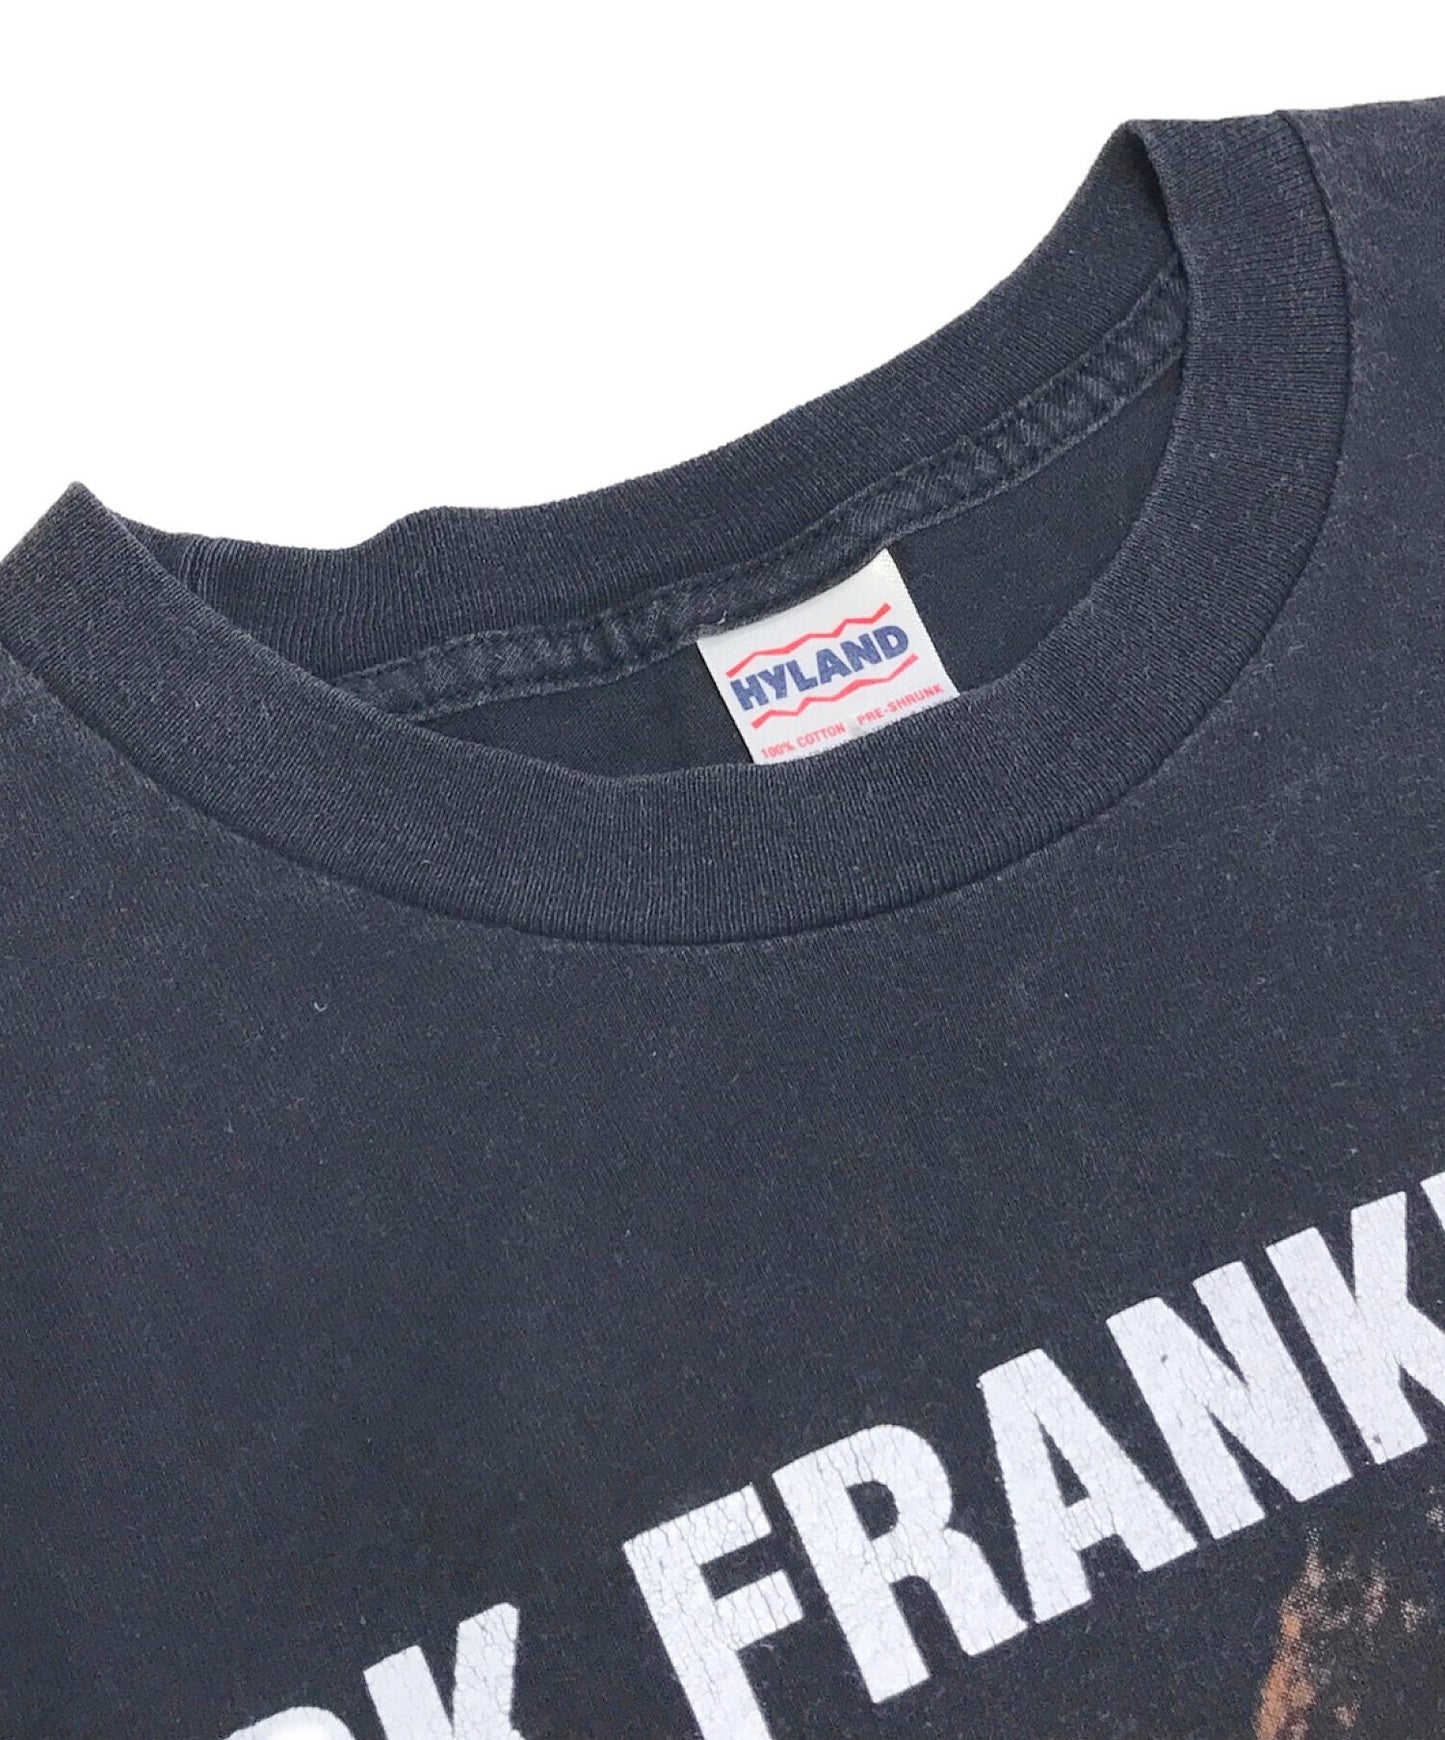 柯克·富兰克林（Kirk Franklin）和家庭嘻哈T恤